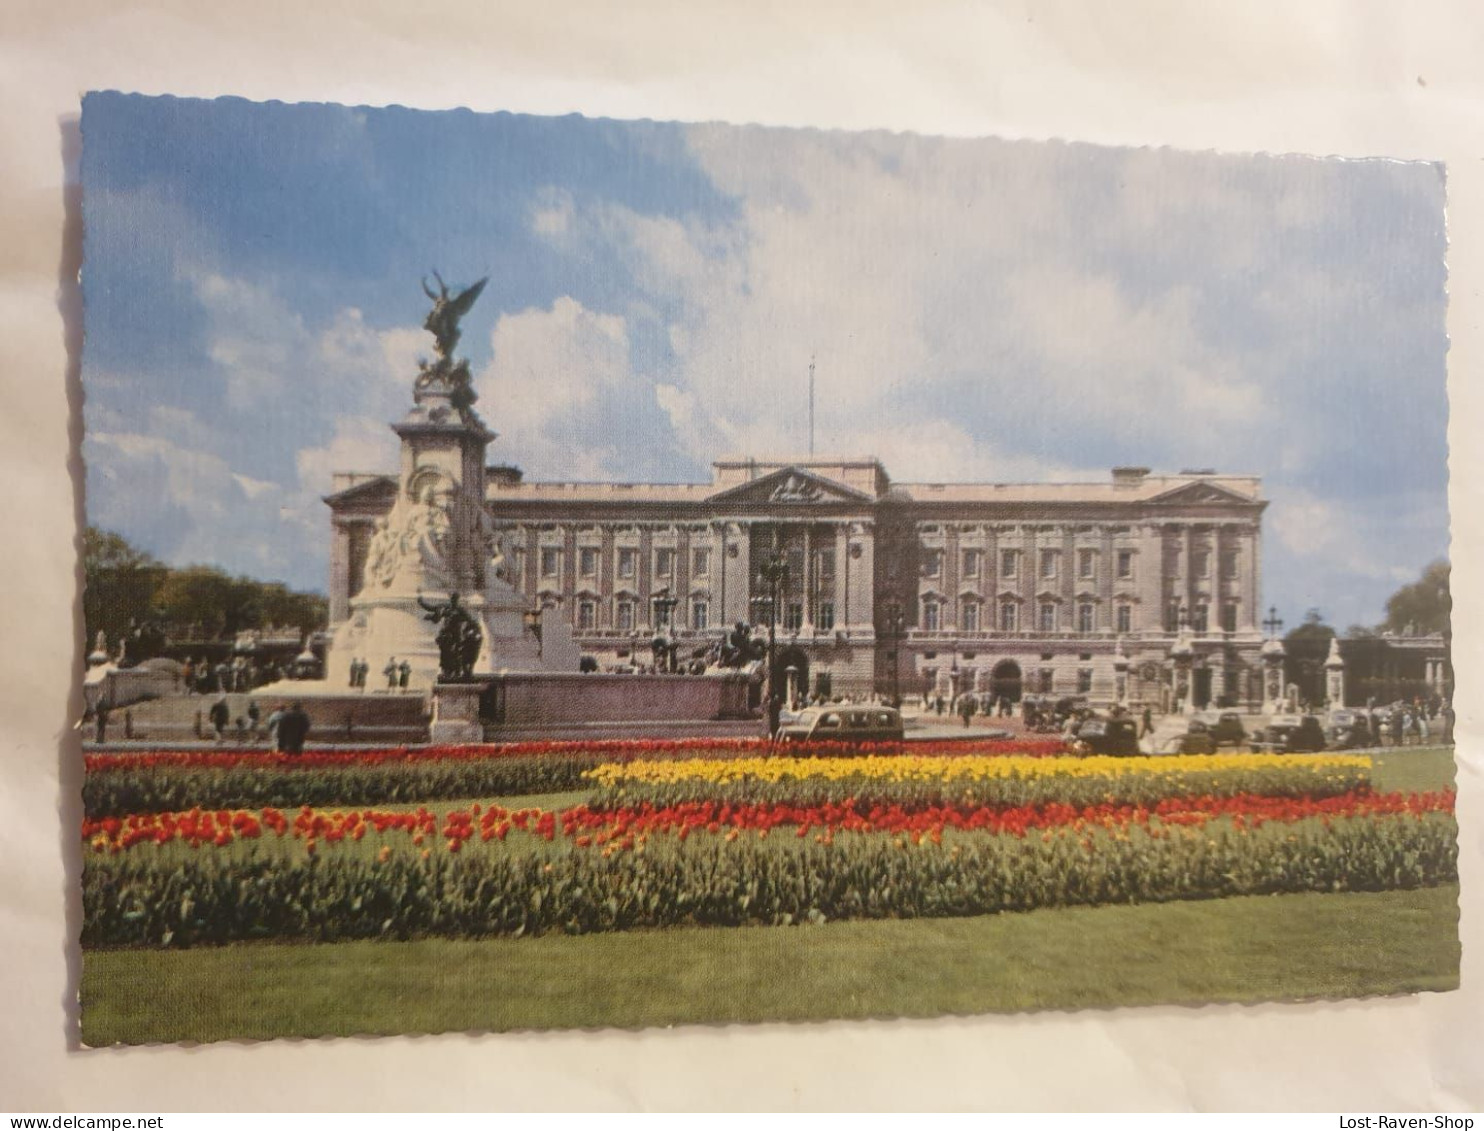 London - Buckingham Palace - Buckingham Palace